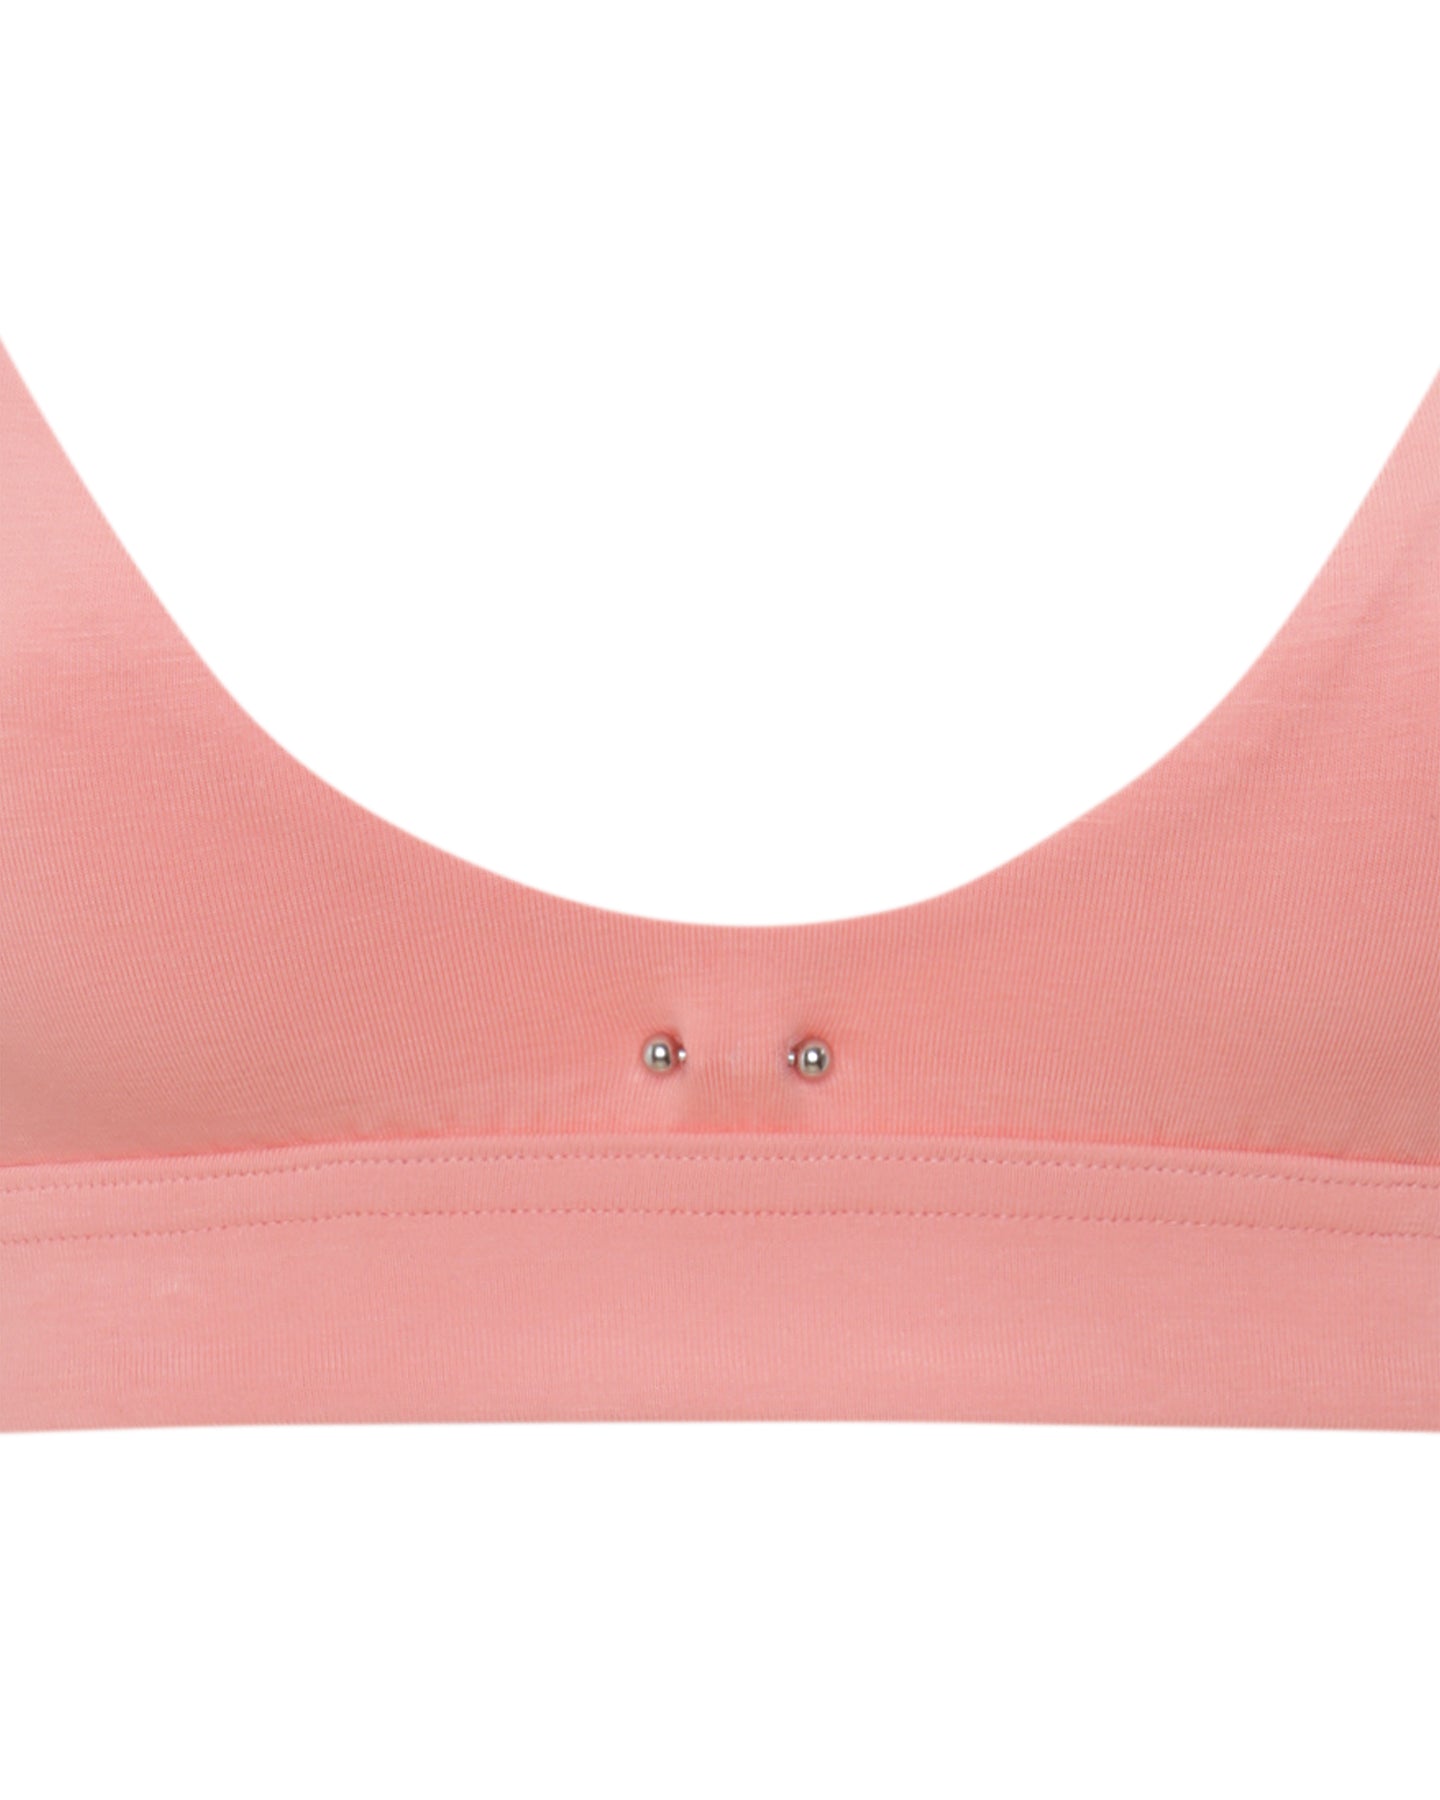 Peach organic cotton bra | sexy lingerie | Plunge Push-up Bra | Lyzawear